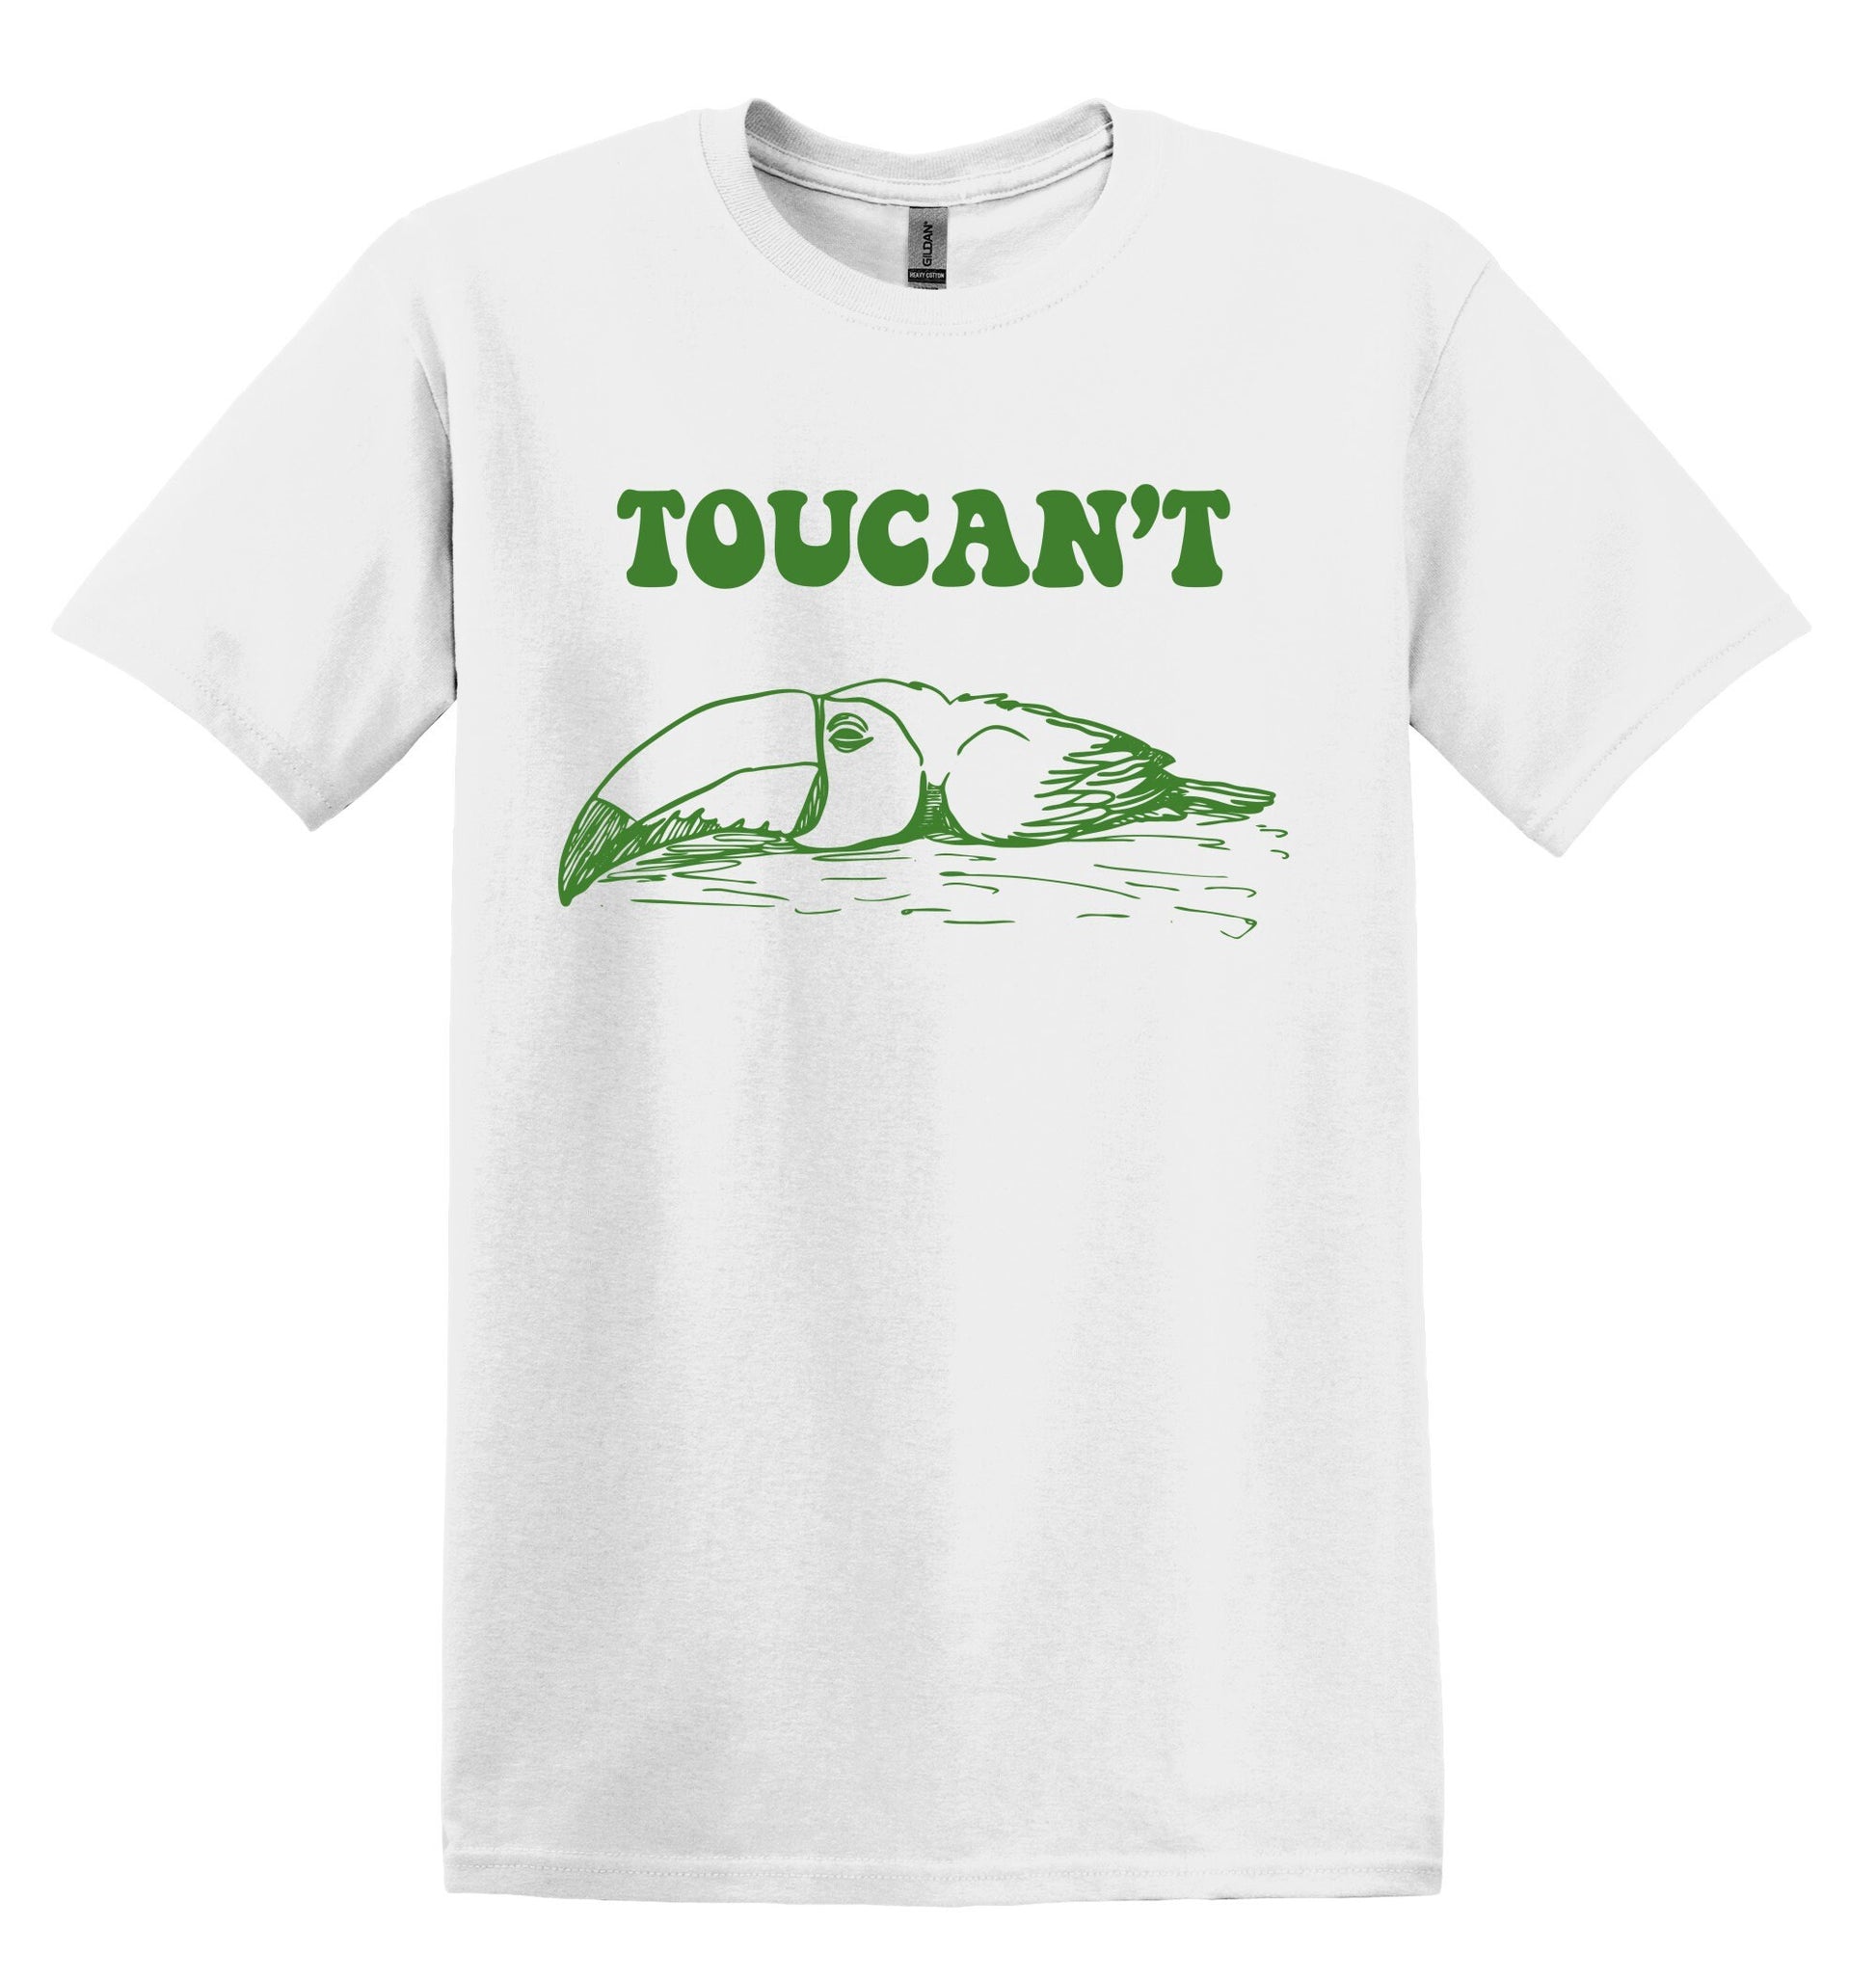 Toocan't Funny Shirt Graphic Shirt Funny Vintage Adult Funny Shirt Nostalgia Shirt Cotton Shirt Minimalist Shirt Minimalist Shirt Gag Shirt